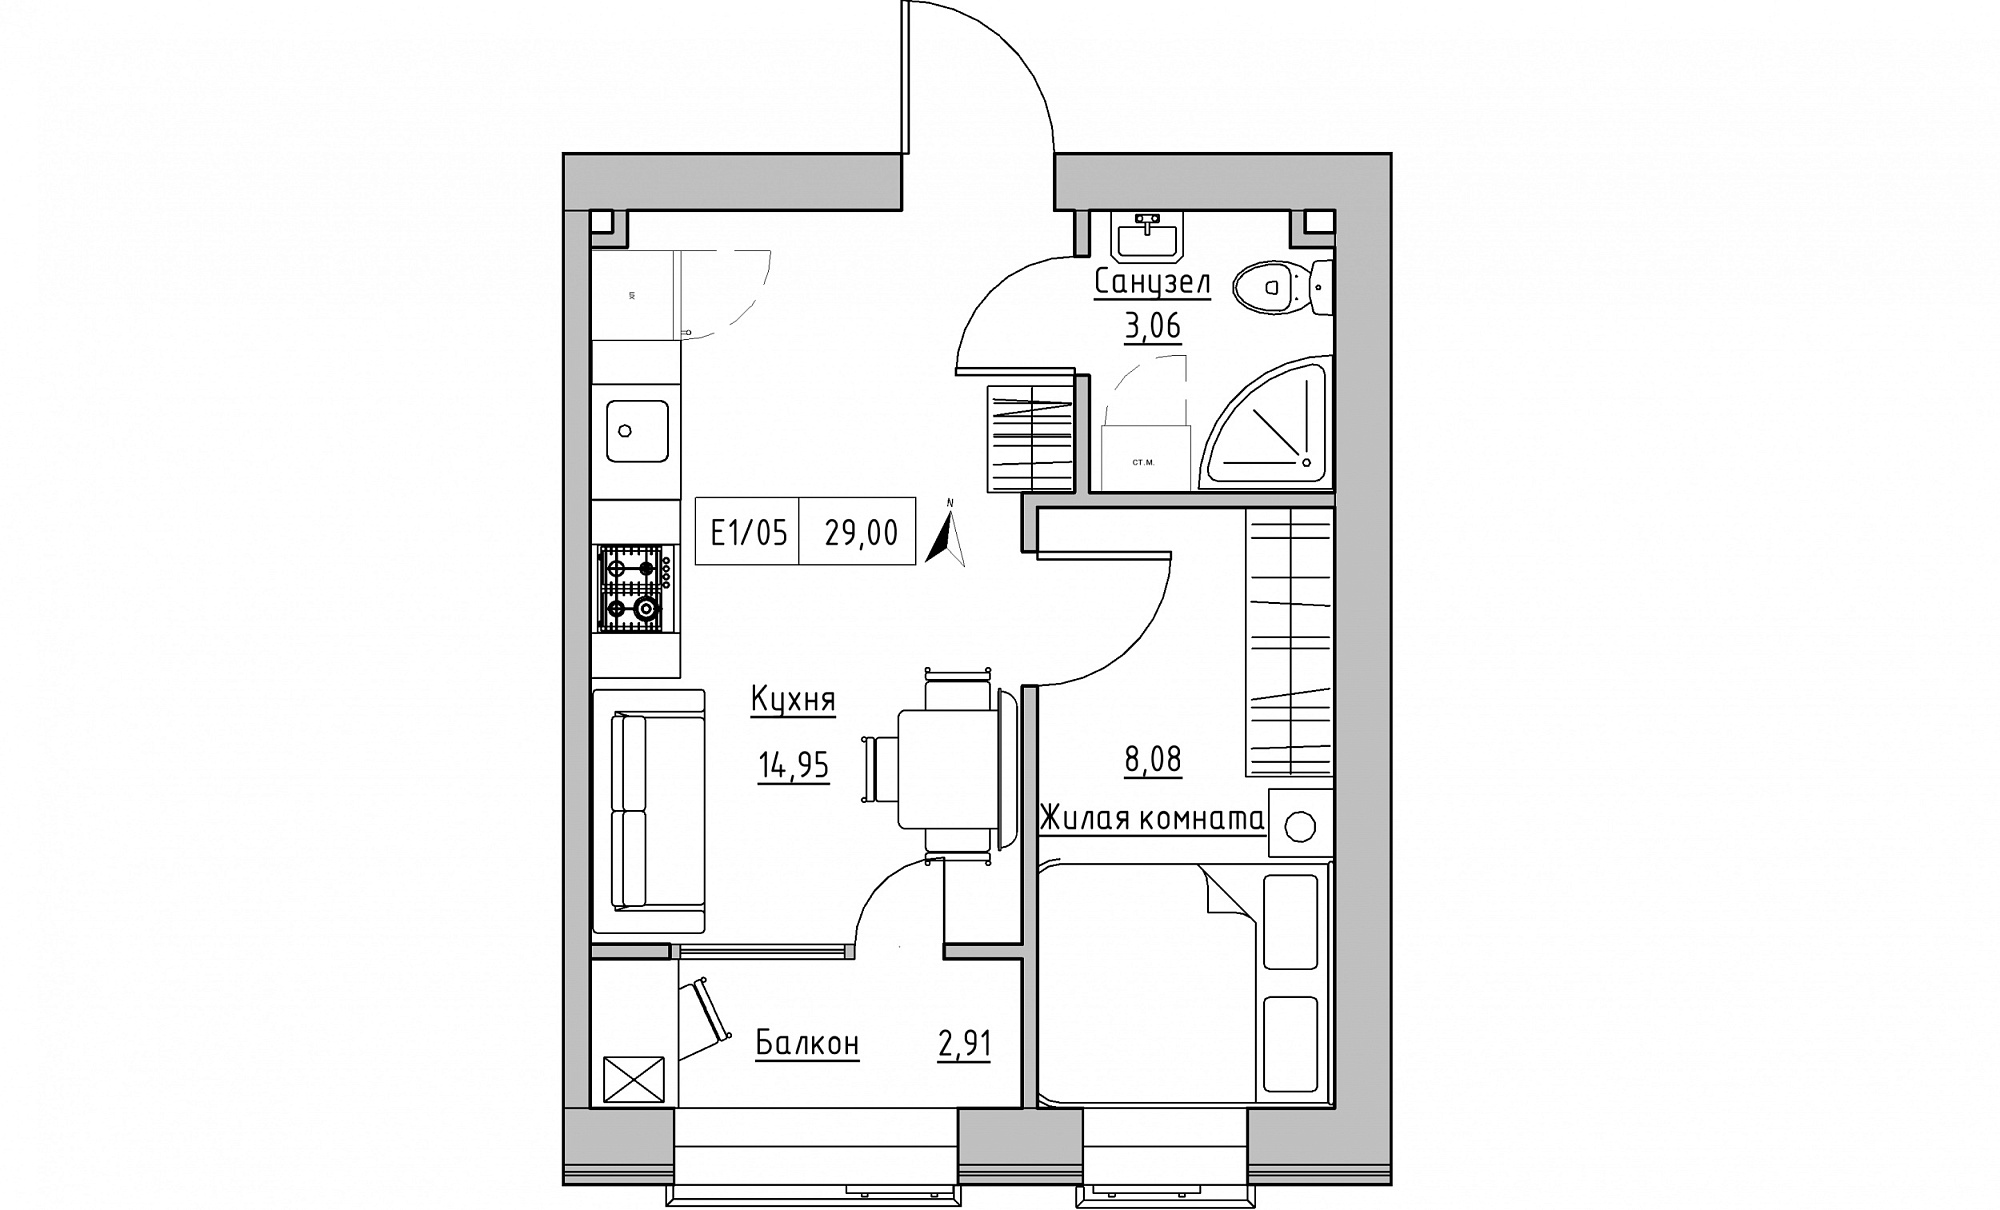 Planning 1-rm flats area 29m2, KS-015-02/0009.